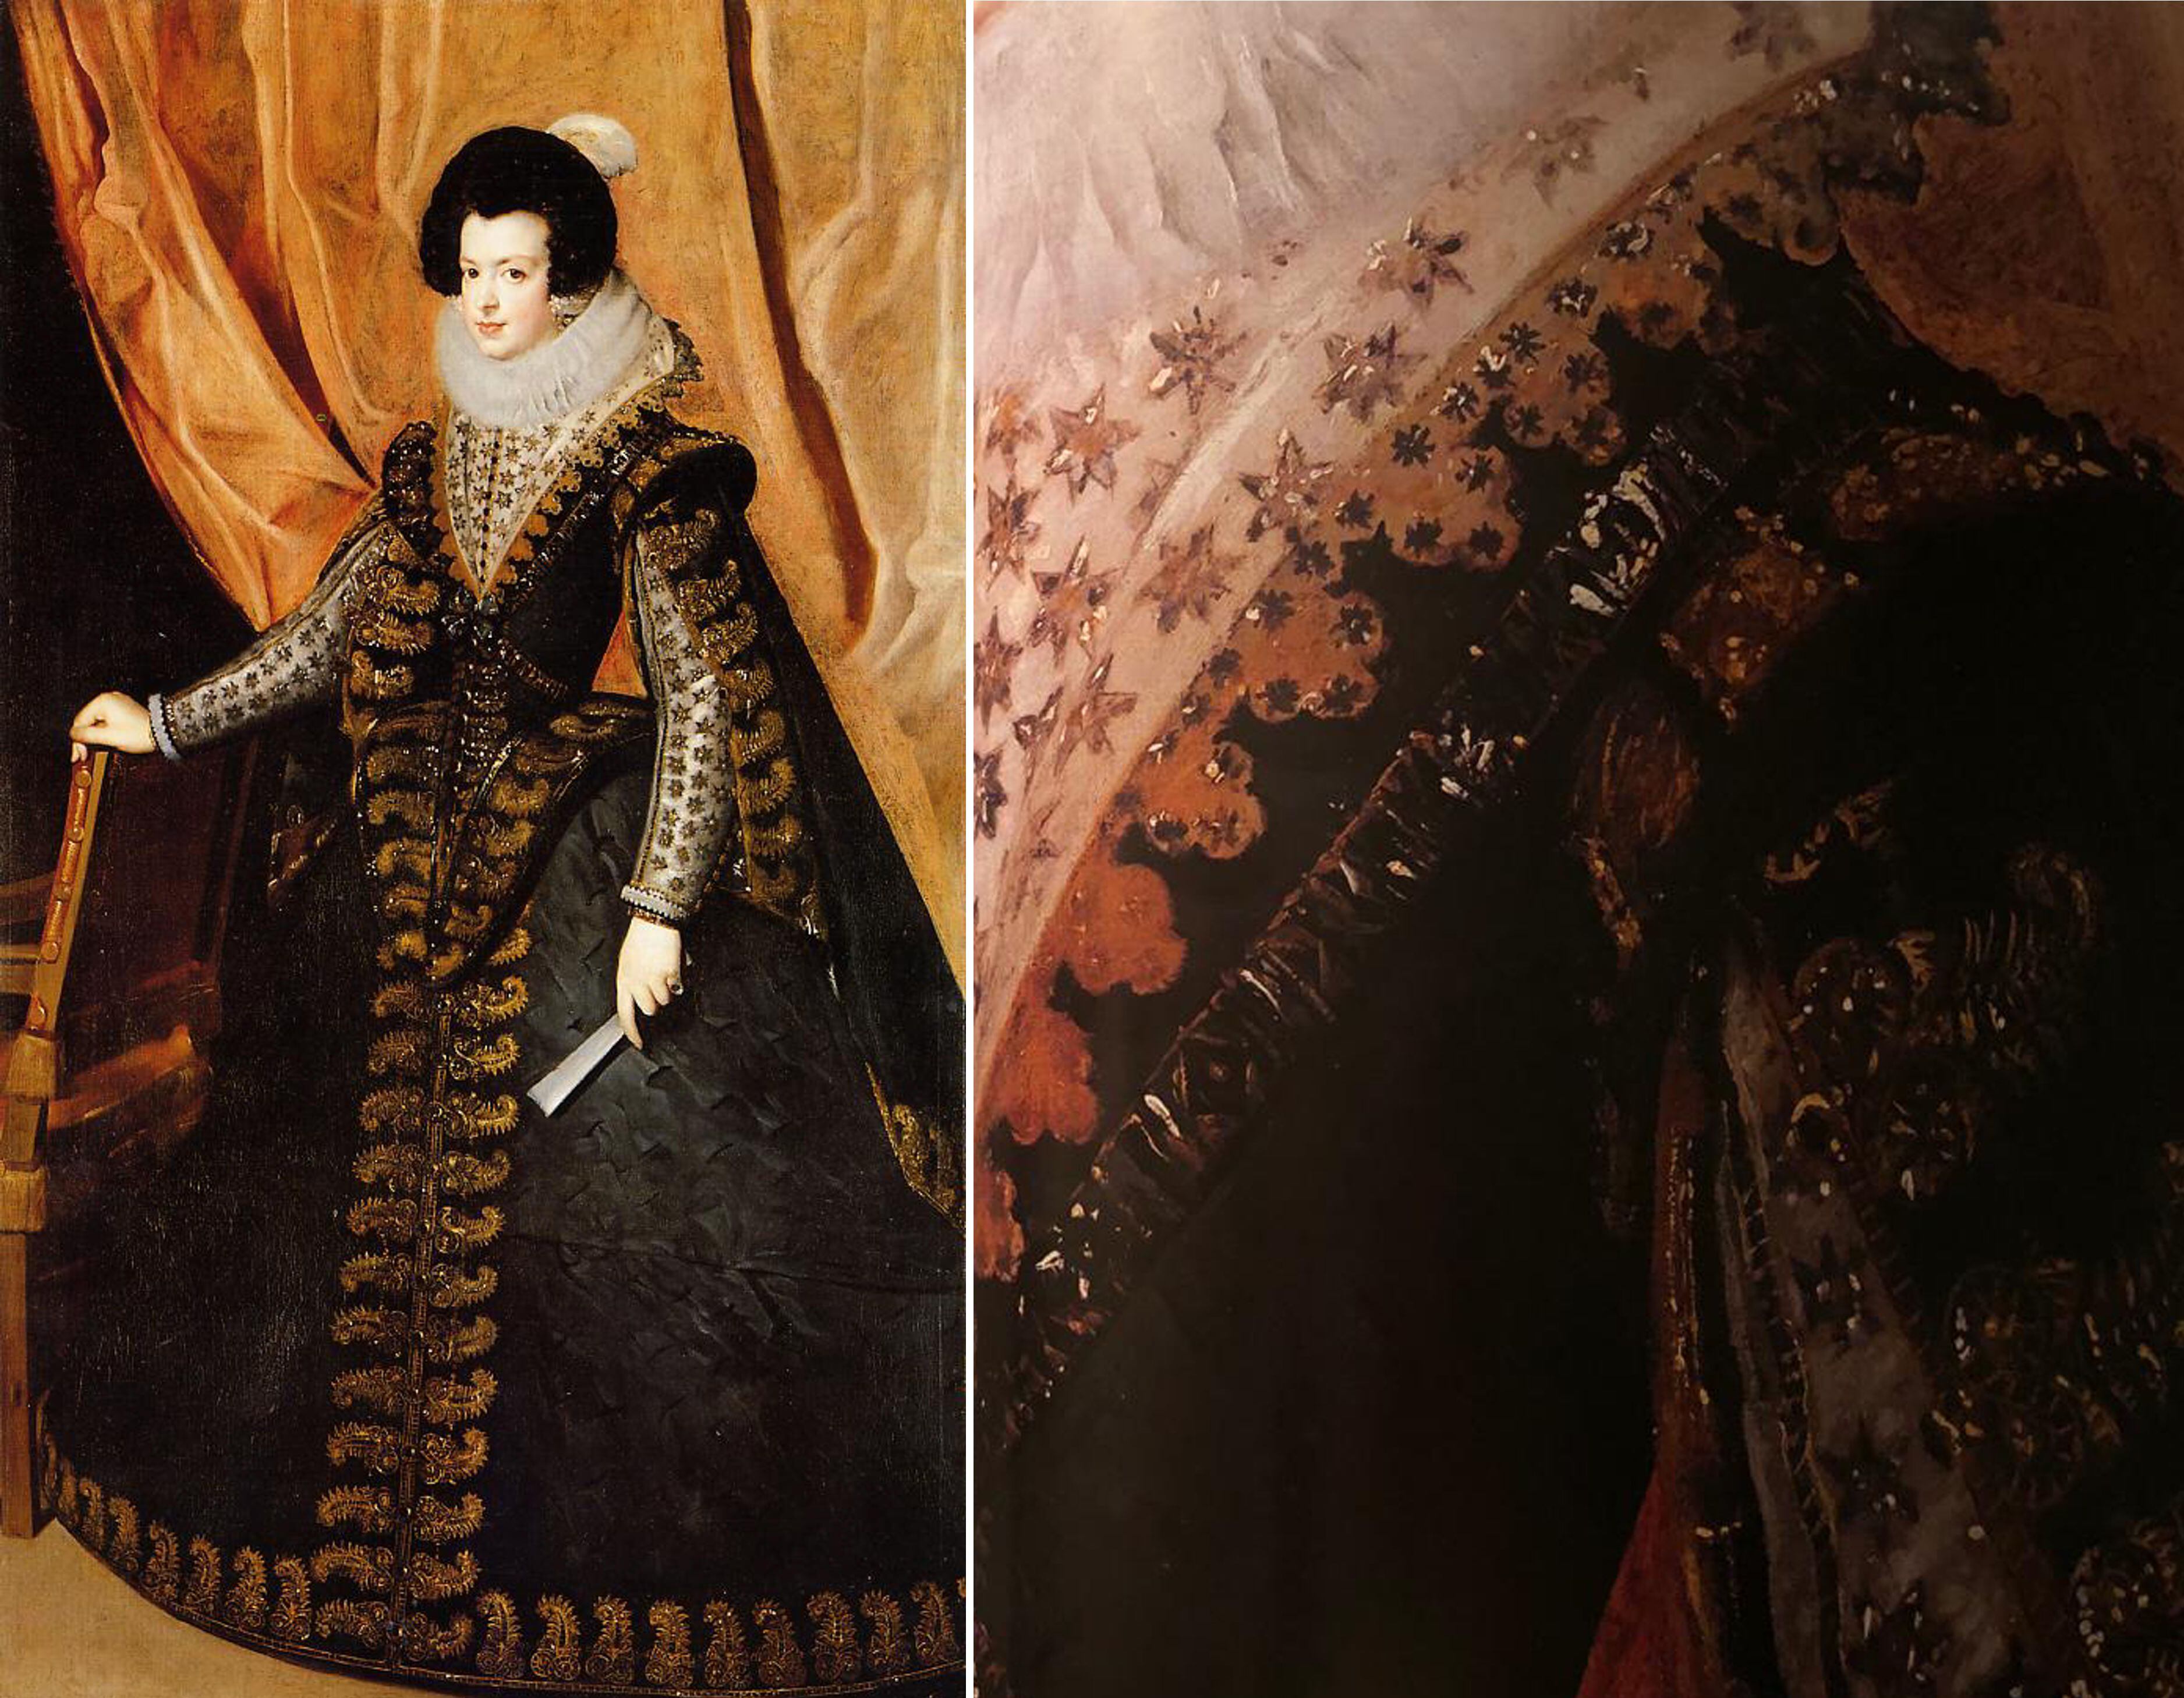 Detalles del cuadro de Isabel de Borbón, de Velázquez.